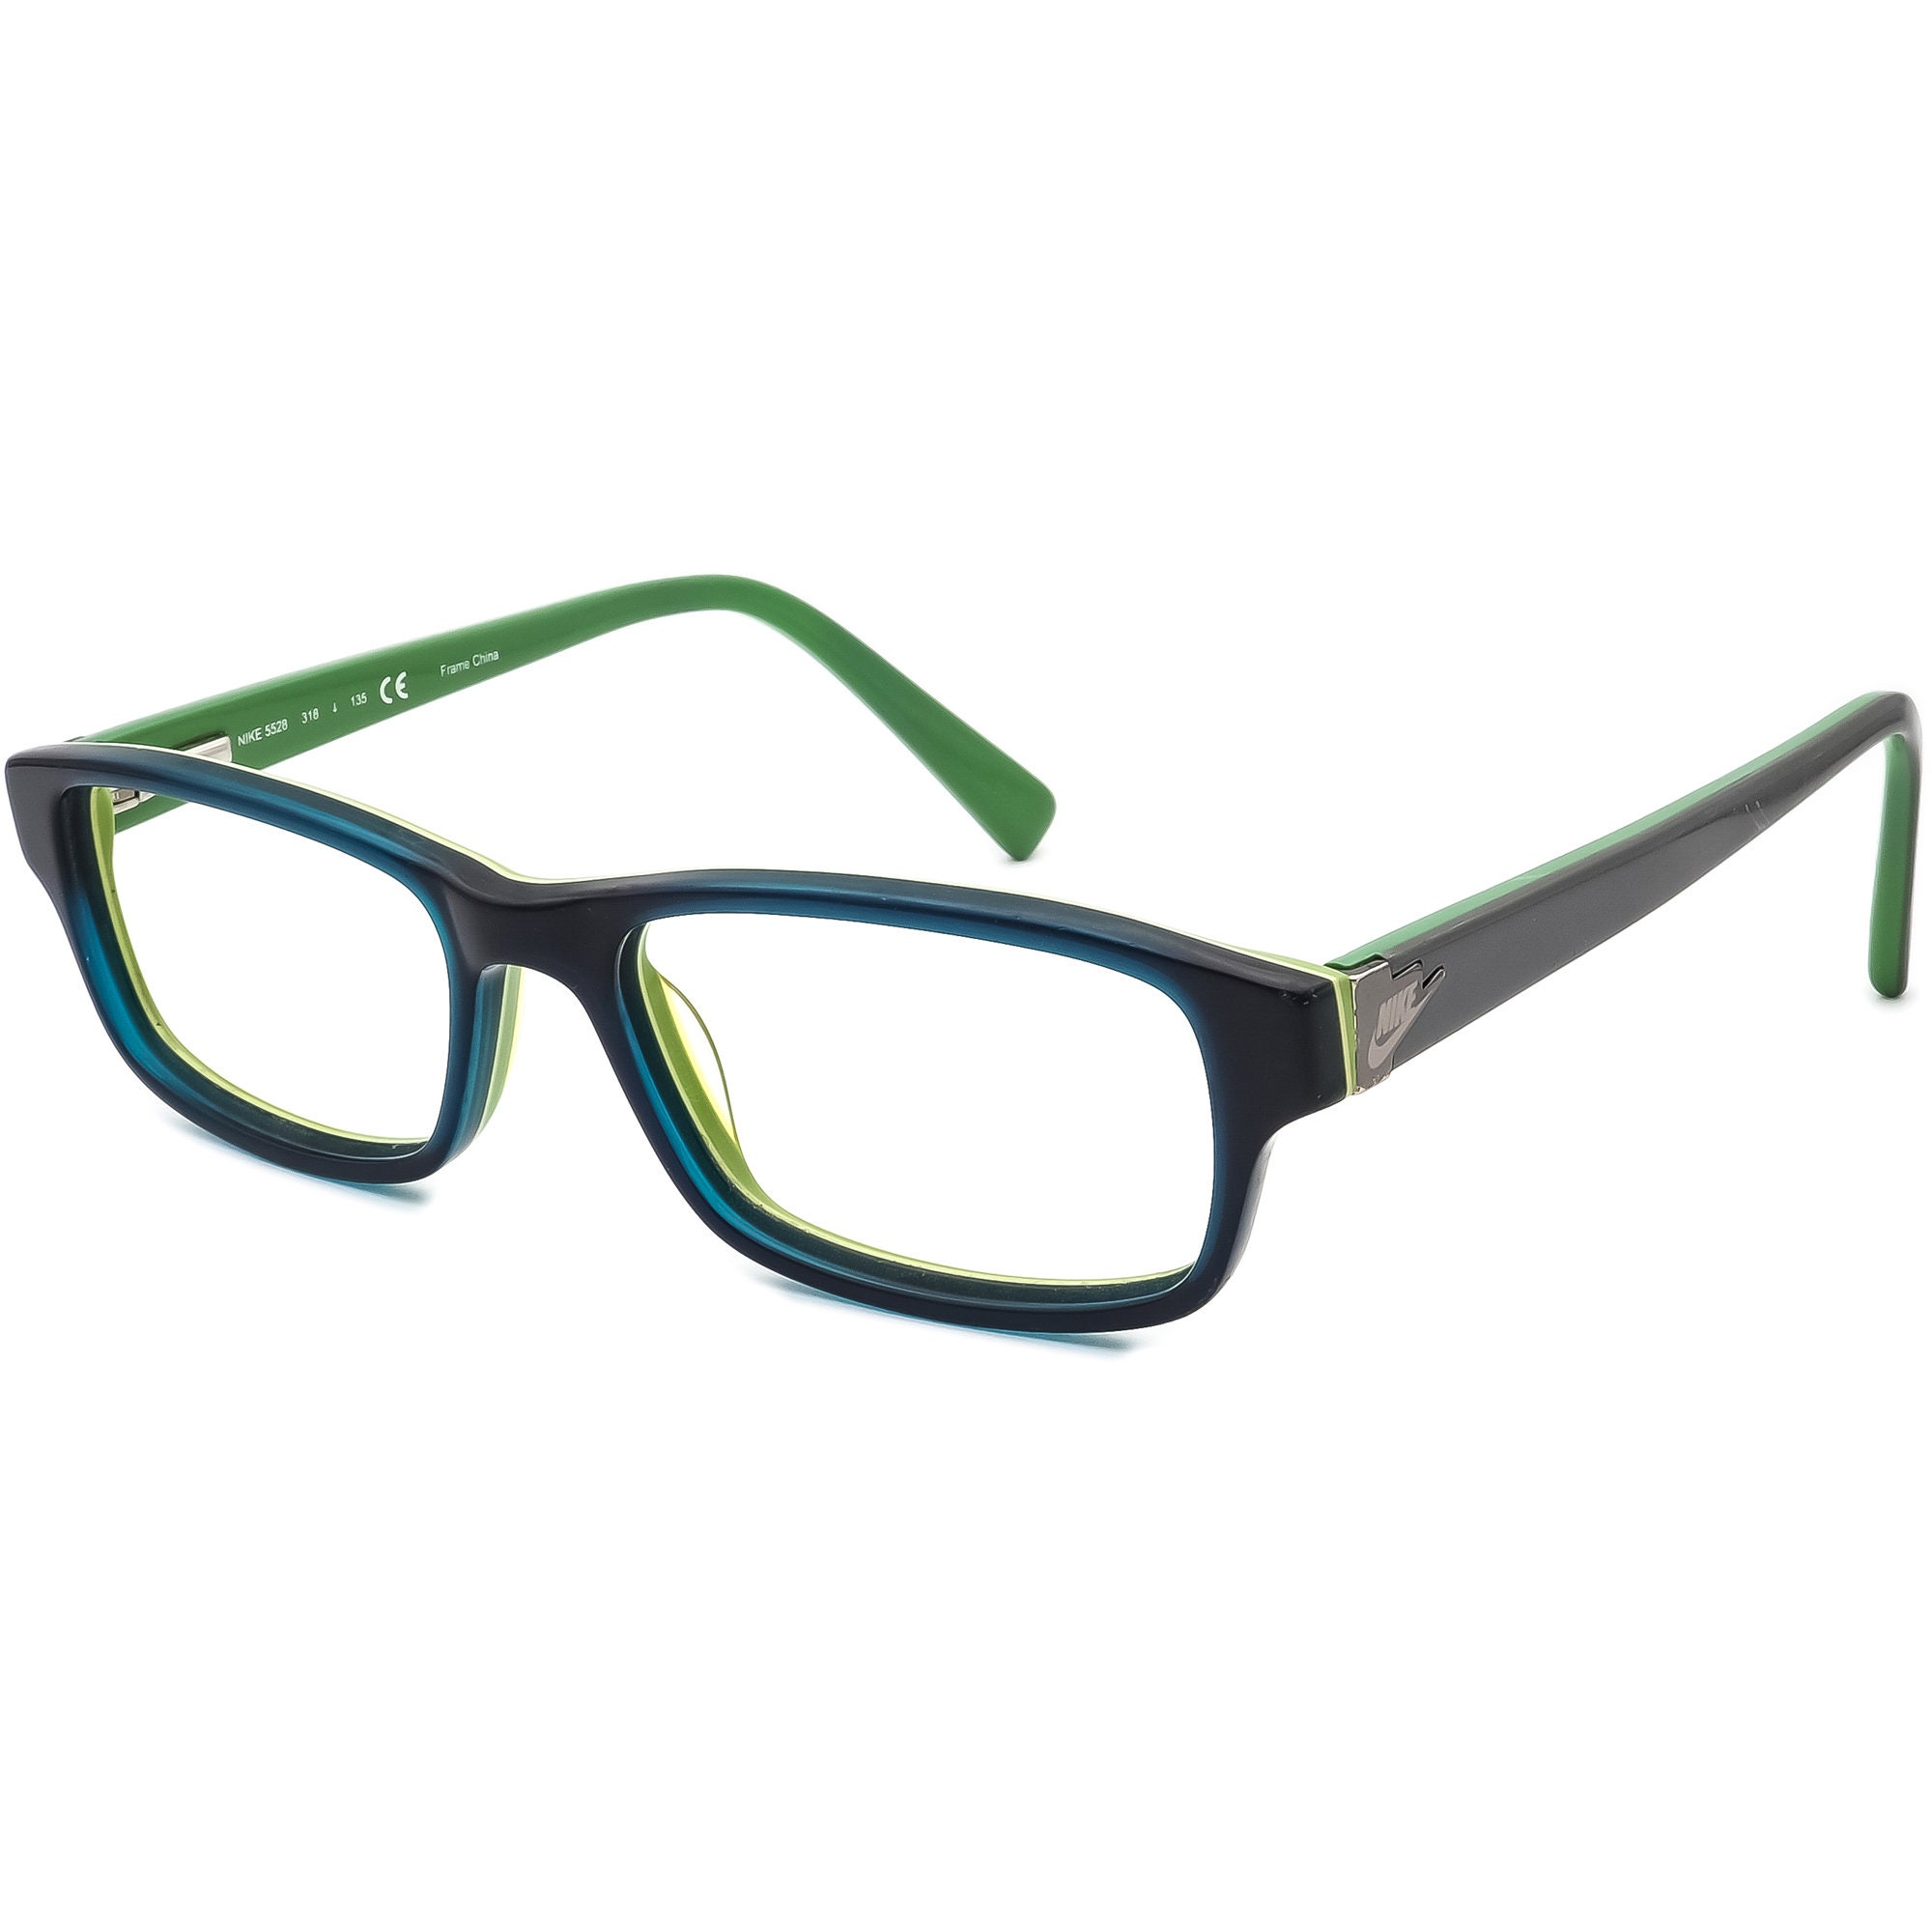 Corte montón estático Nike Small Eyeglasses 5528 318 Blue on Lime Green Rectangular - Etsy